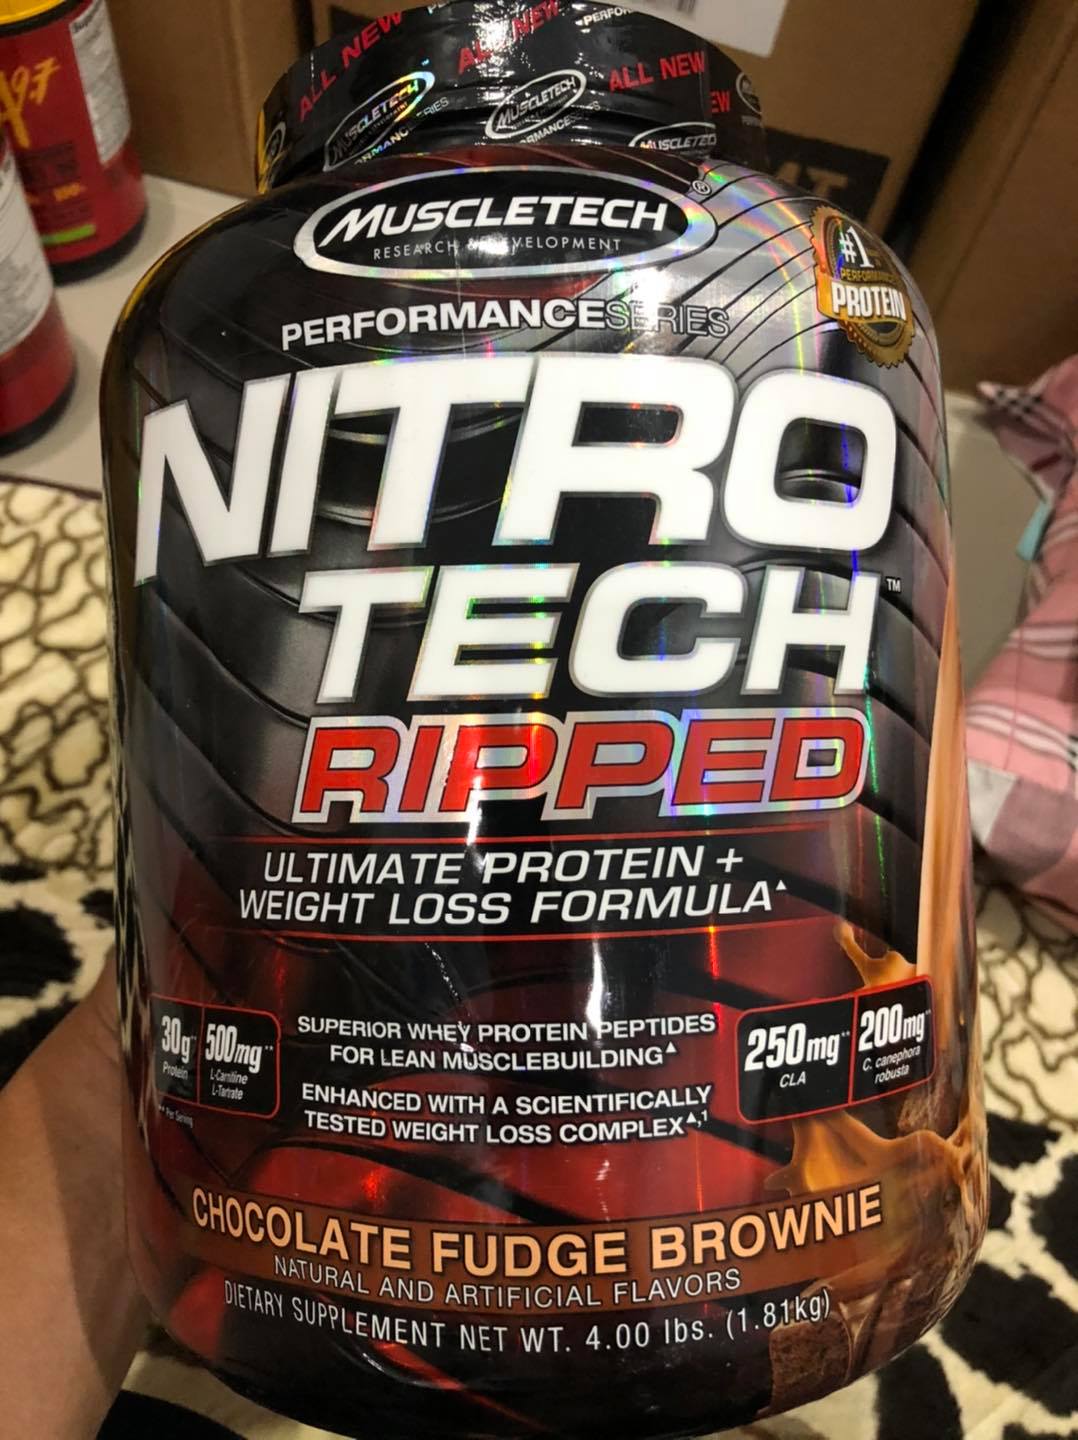 Nitro tech RIPPED 🔥🔥เวย์ตัวเทพ เพิ่มกล้ามและลีนไขมัน D whey